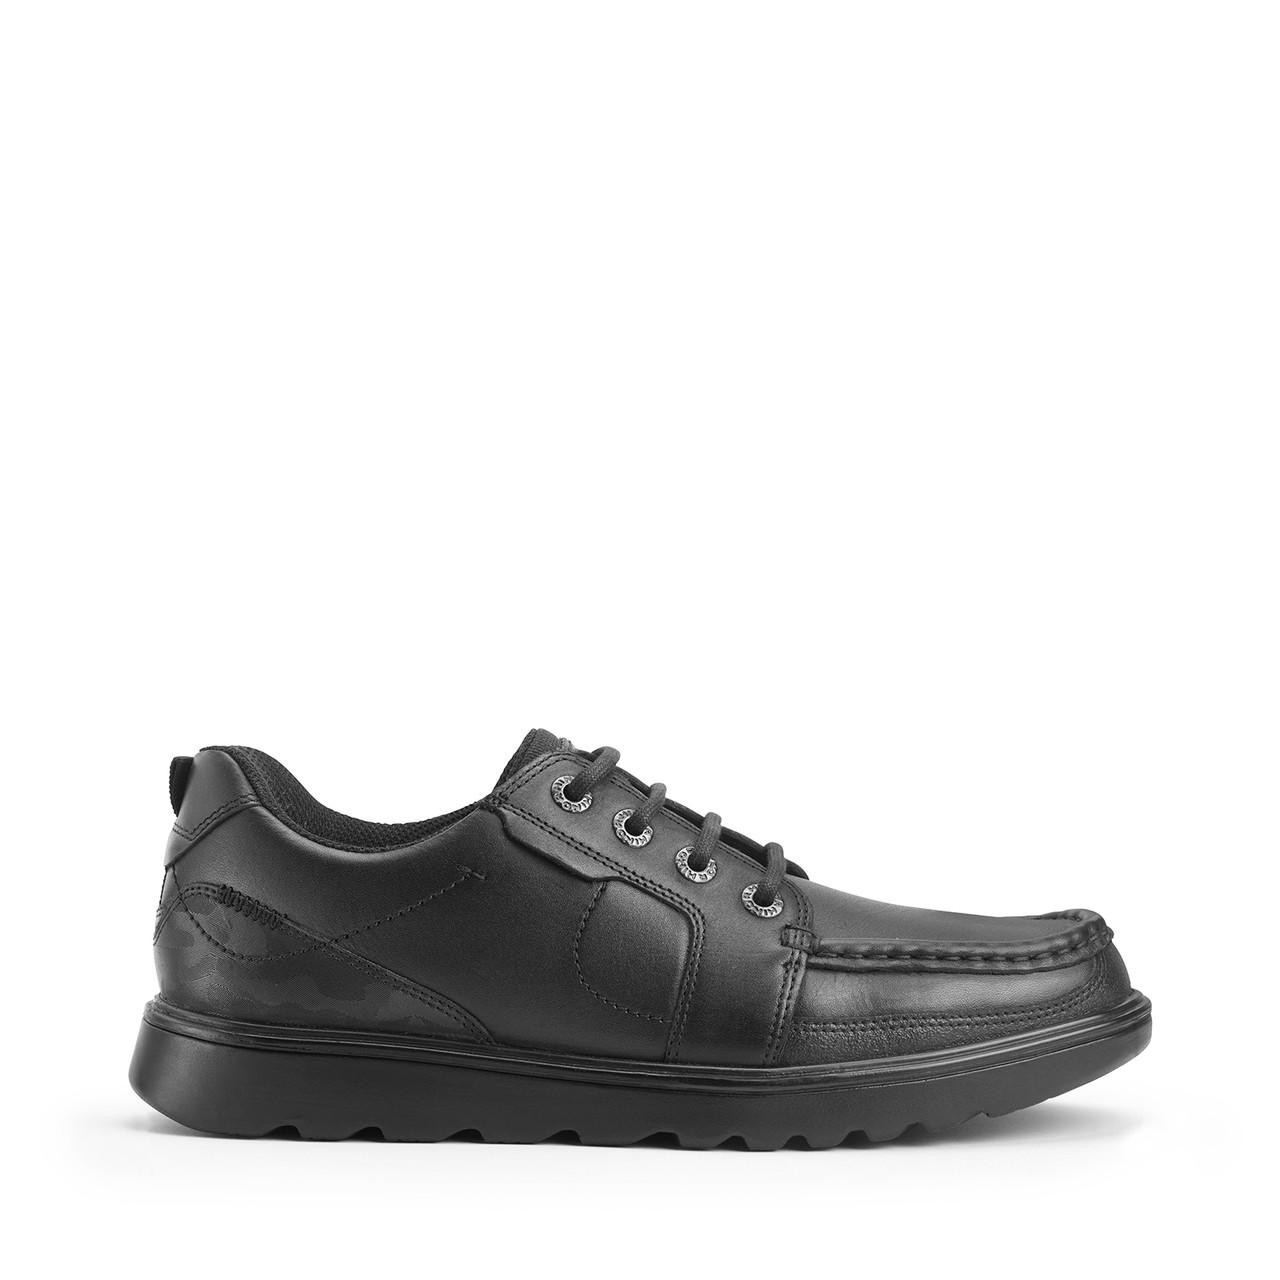 Cadet, Black leather boys lace-up school shoes